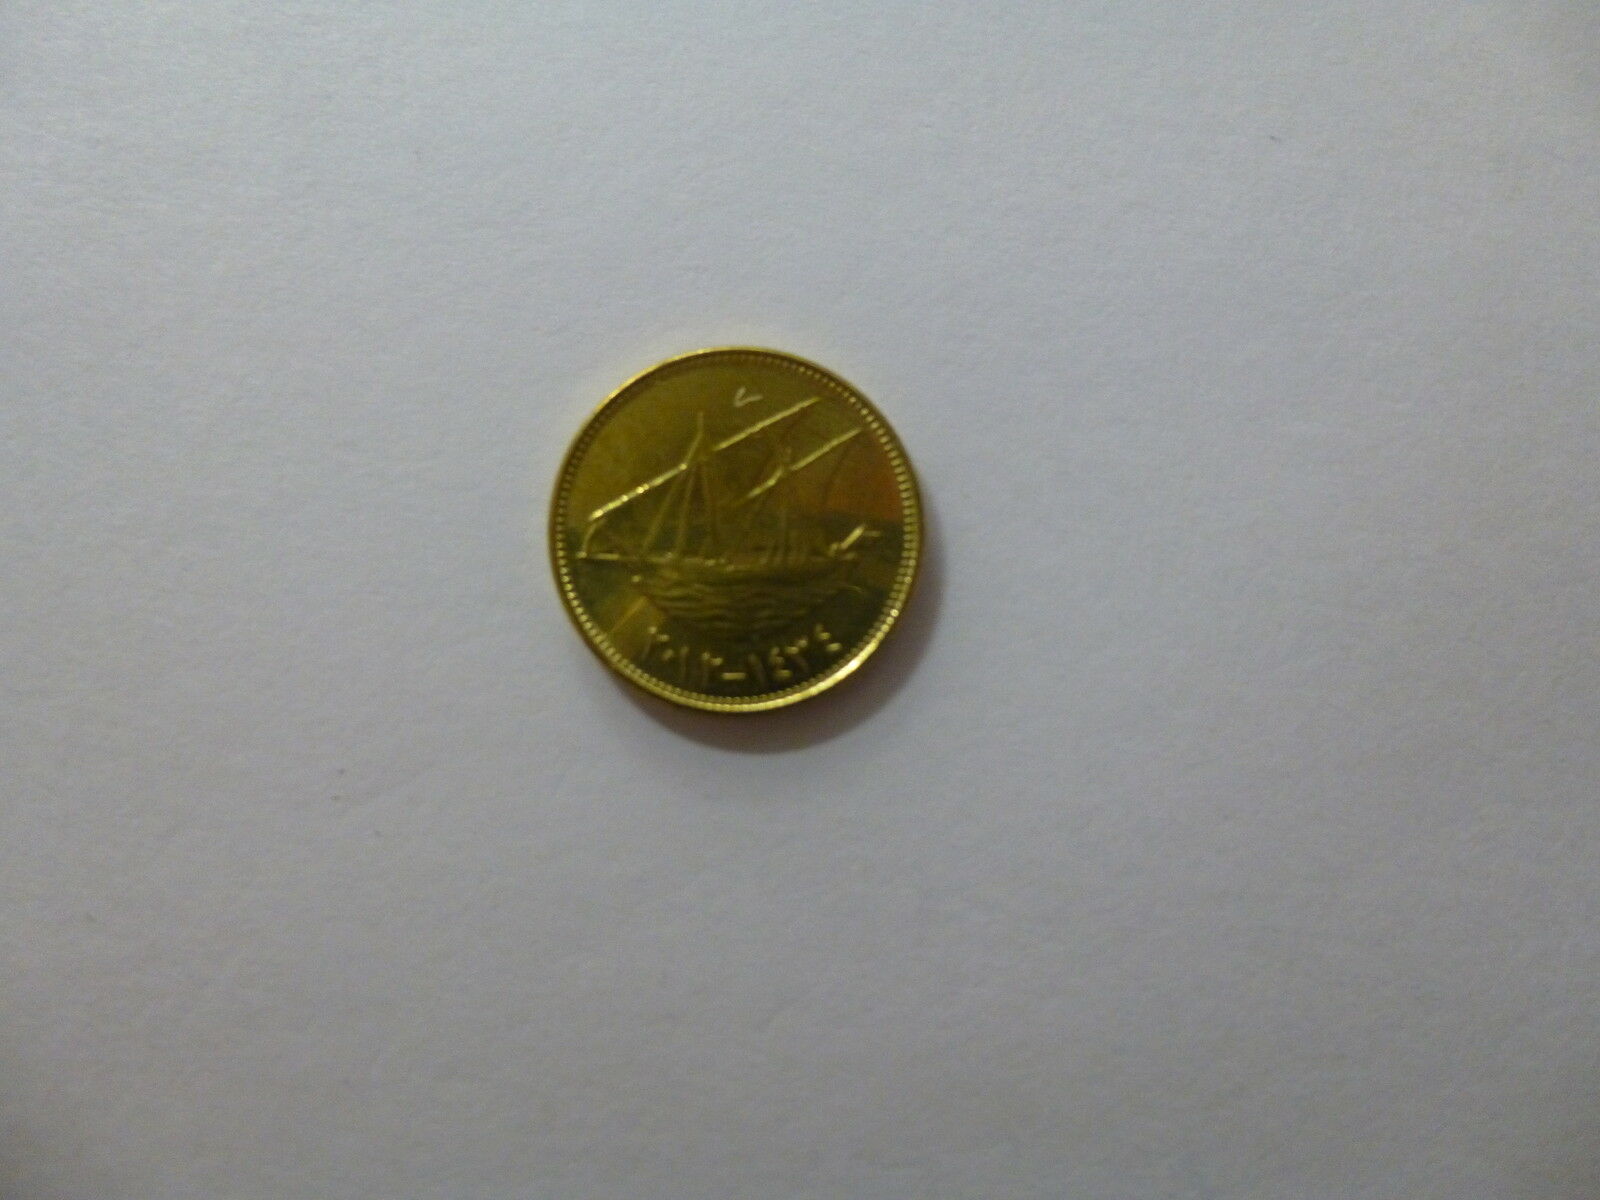 Kuwait Coin - 2012 10 Fils - Brilliant Uncirculated